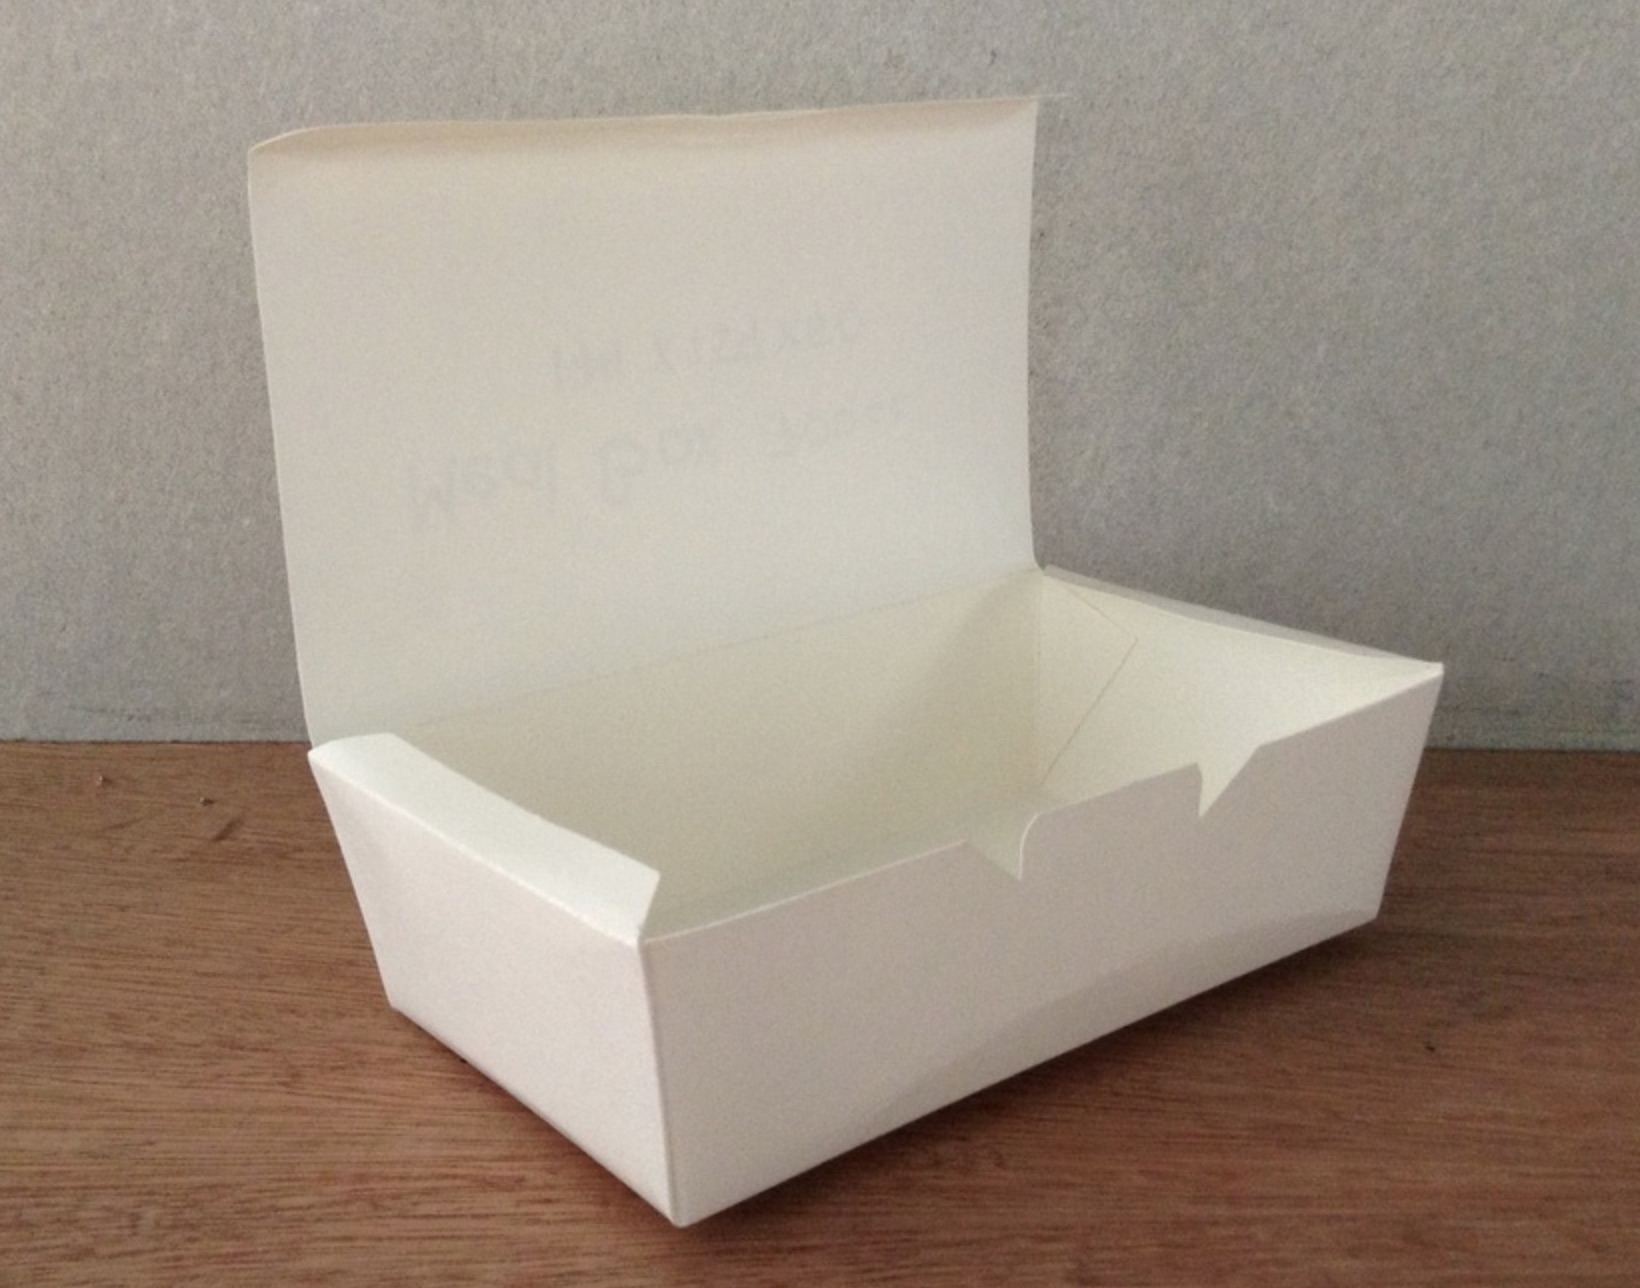 Disposable Paper Box